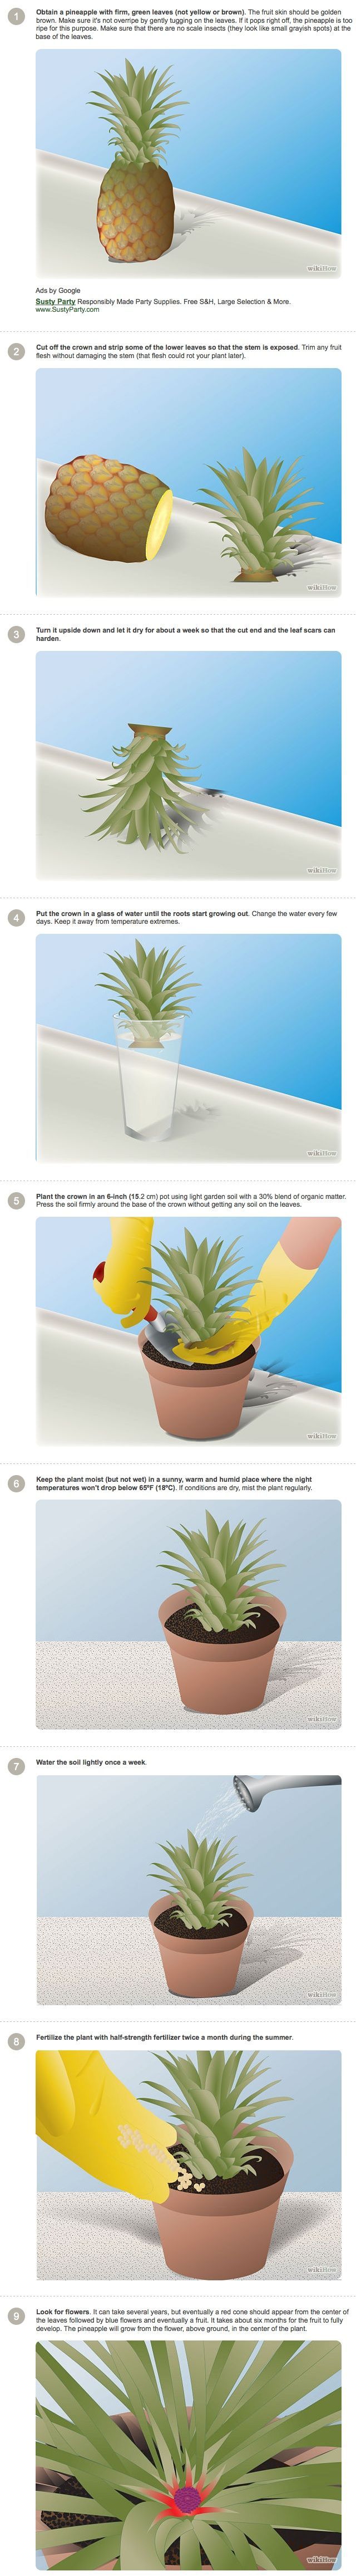 How to grow a pineapple tree! Looks like a great plant!